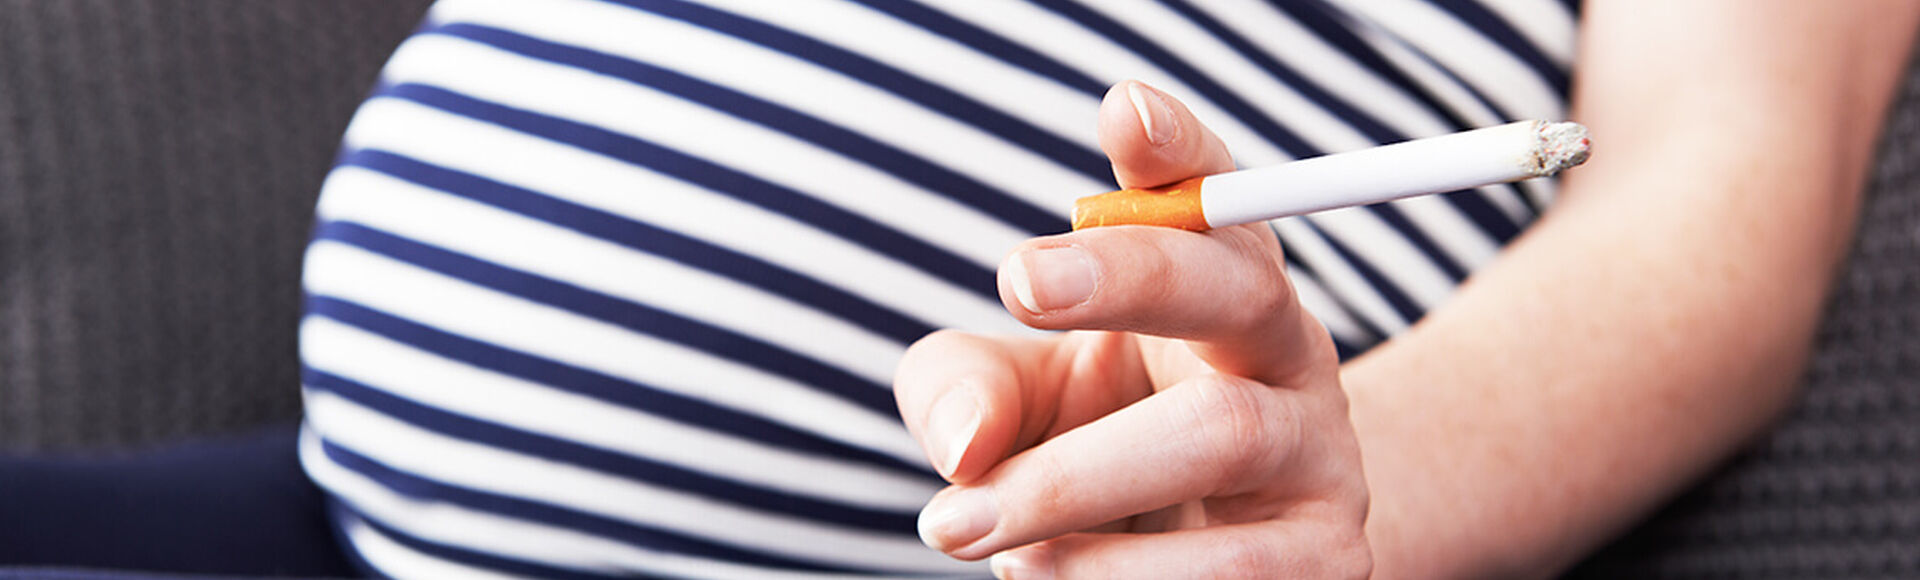 Dicas para evitar fumar cigarros na gravidez